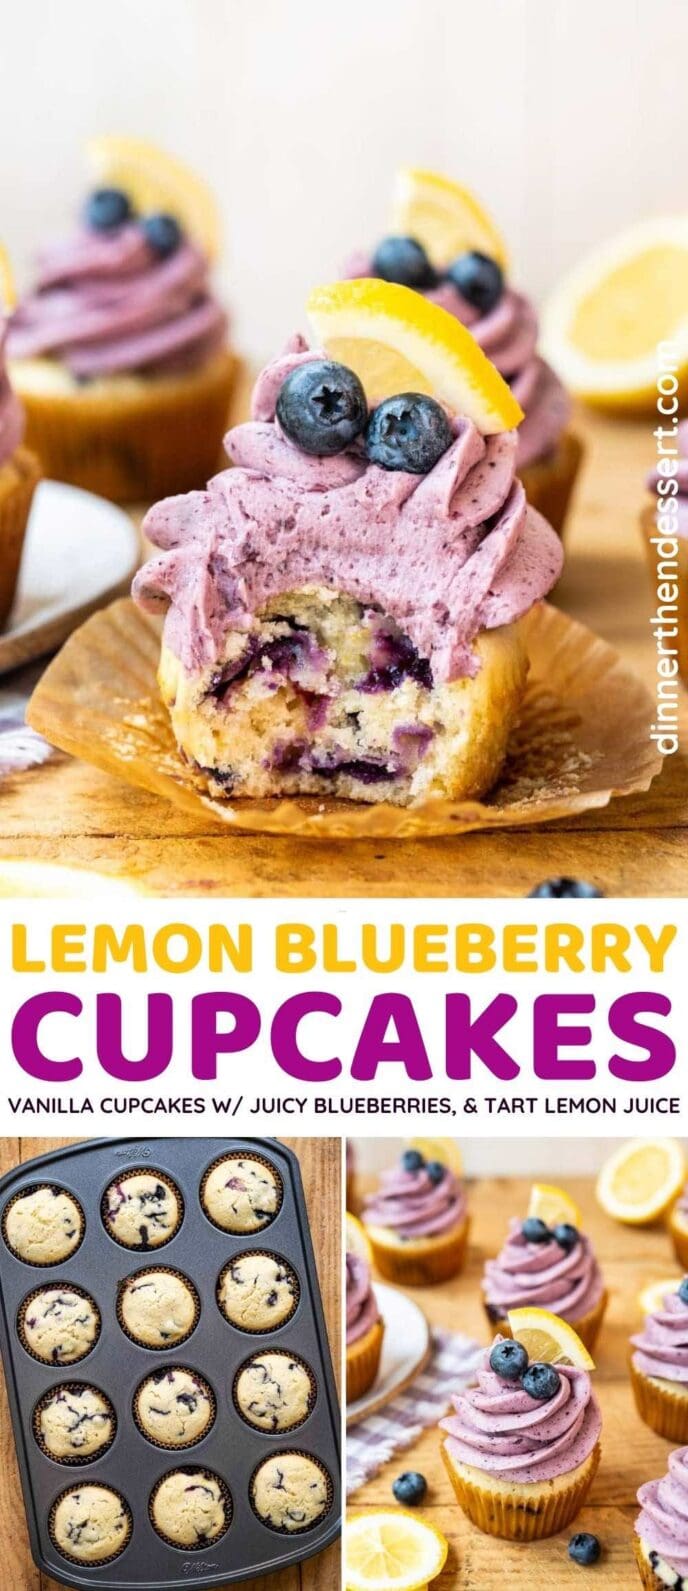 Blueberry Lemon Cupcakes collage